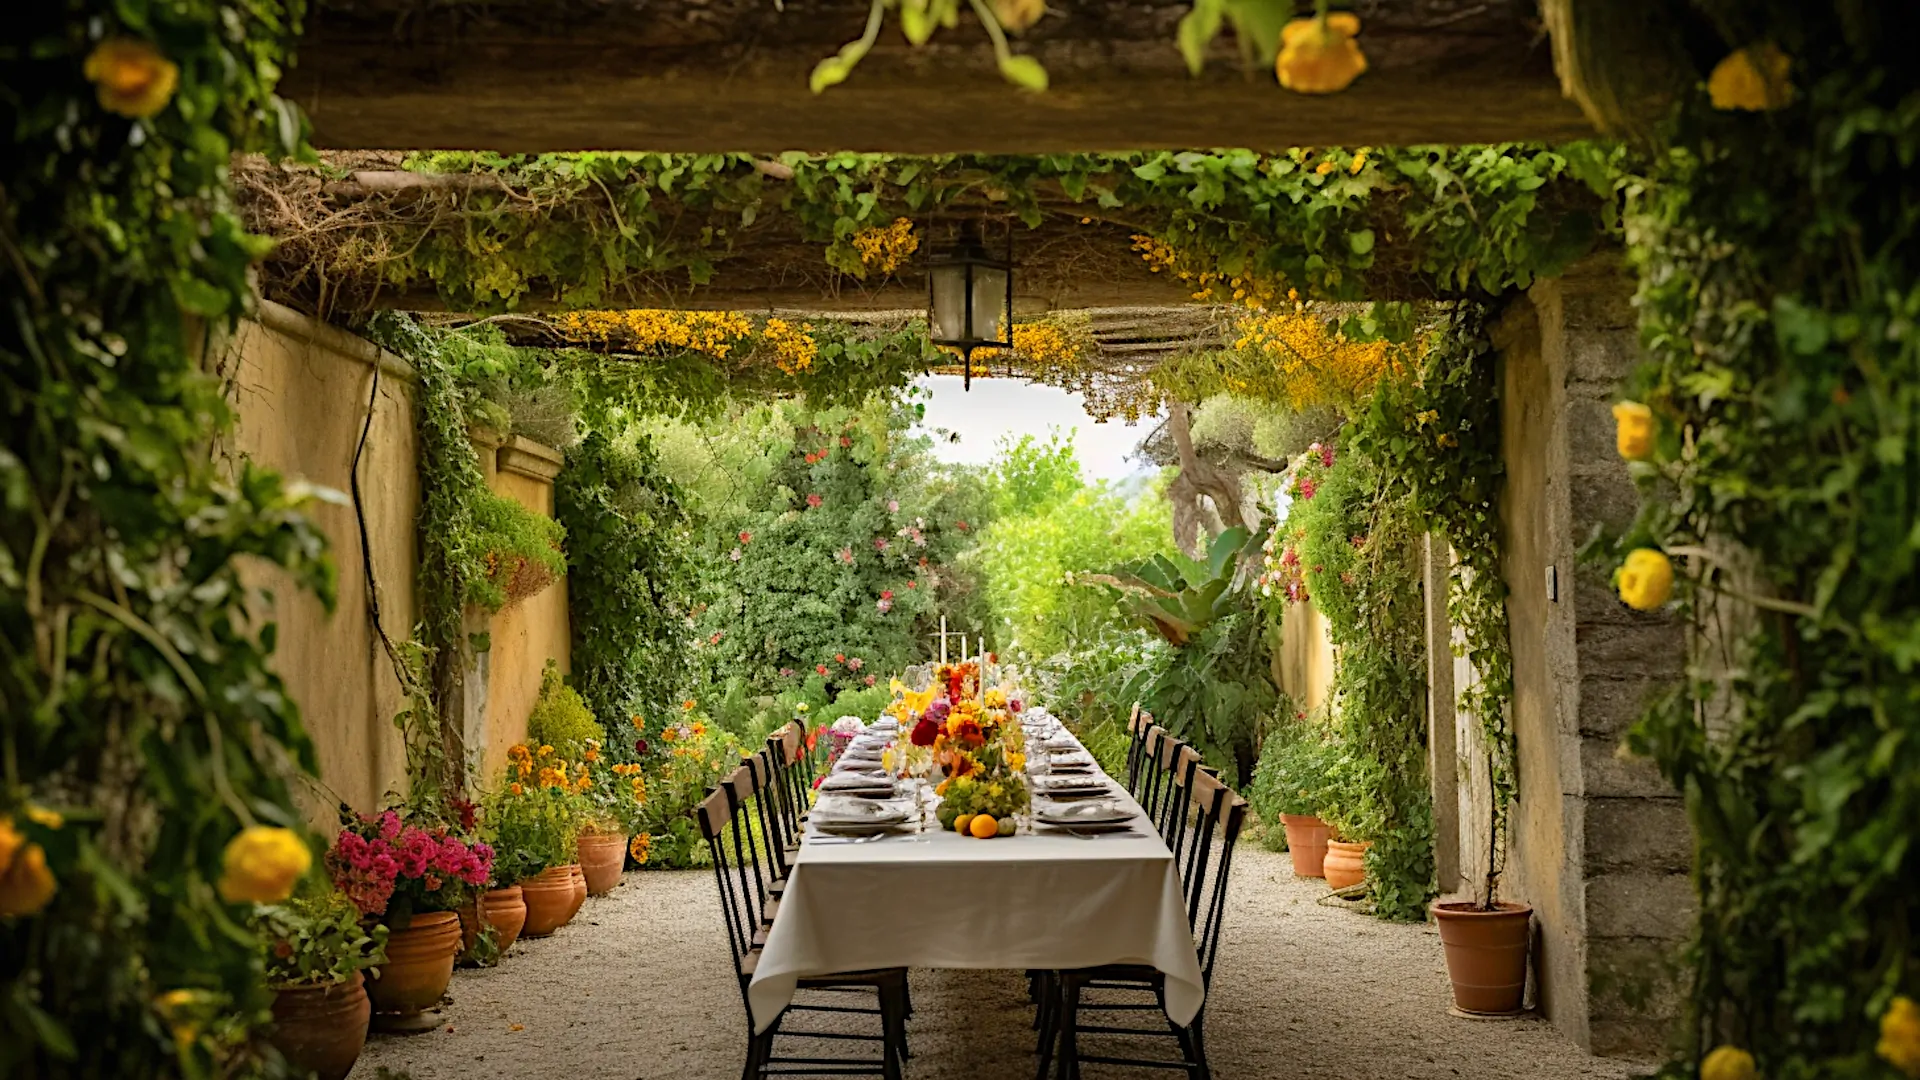 sicilian-mediterranean garden with laid table